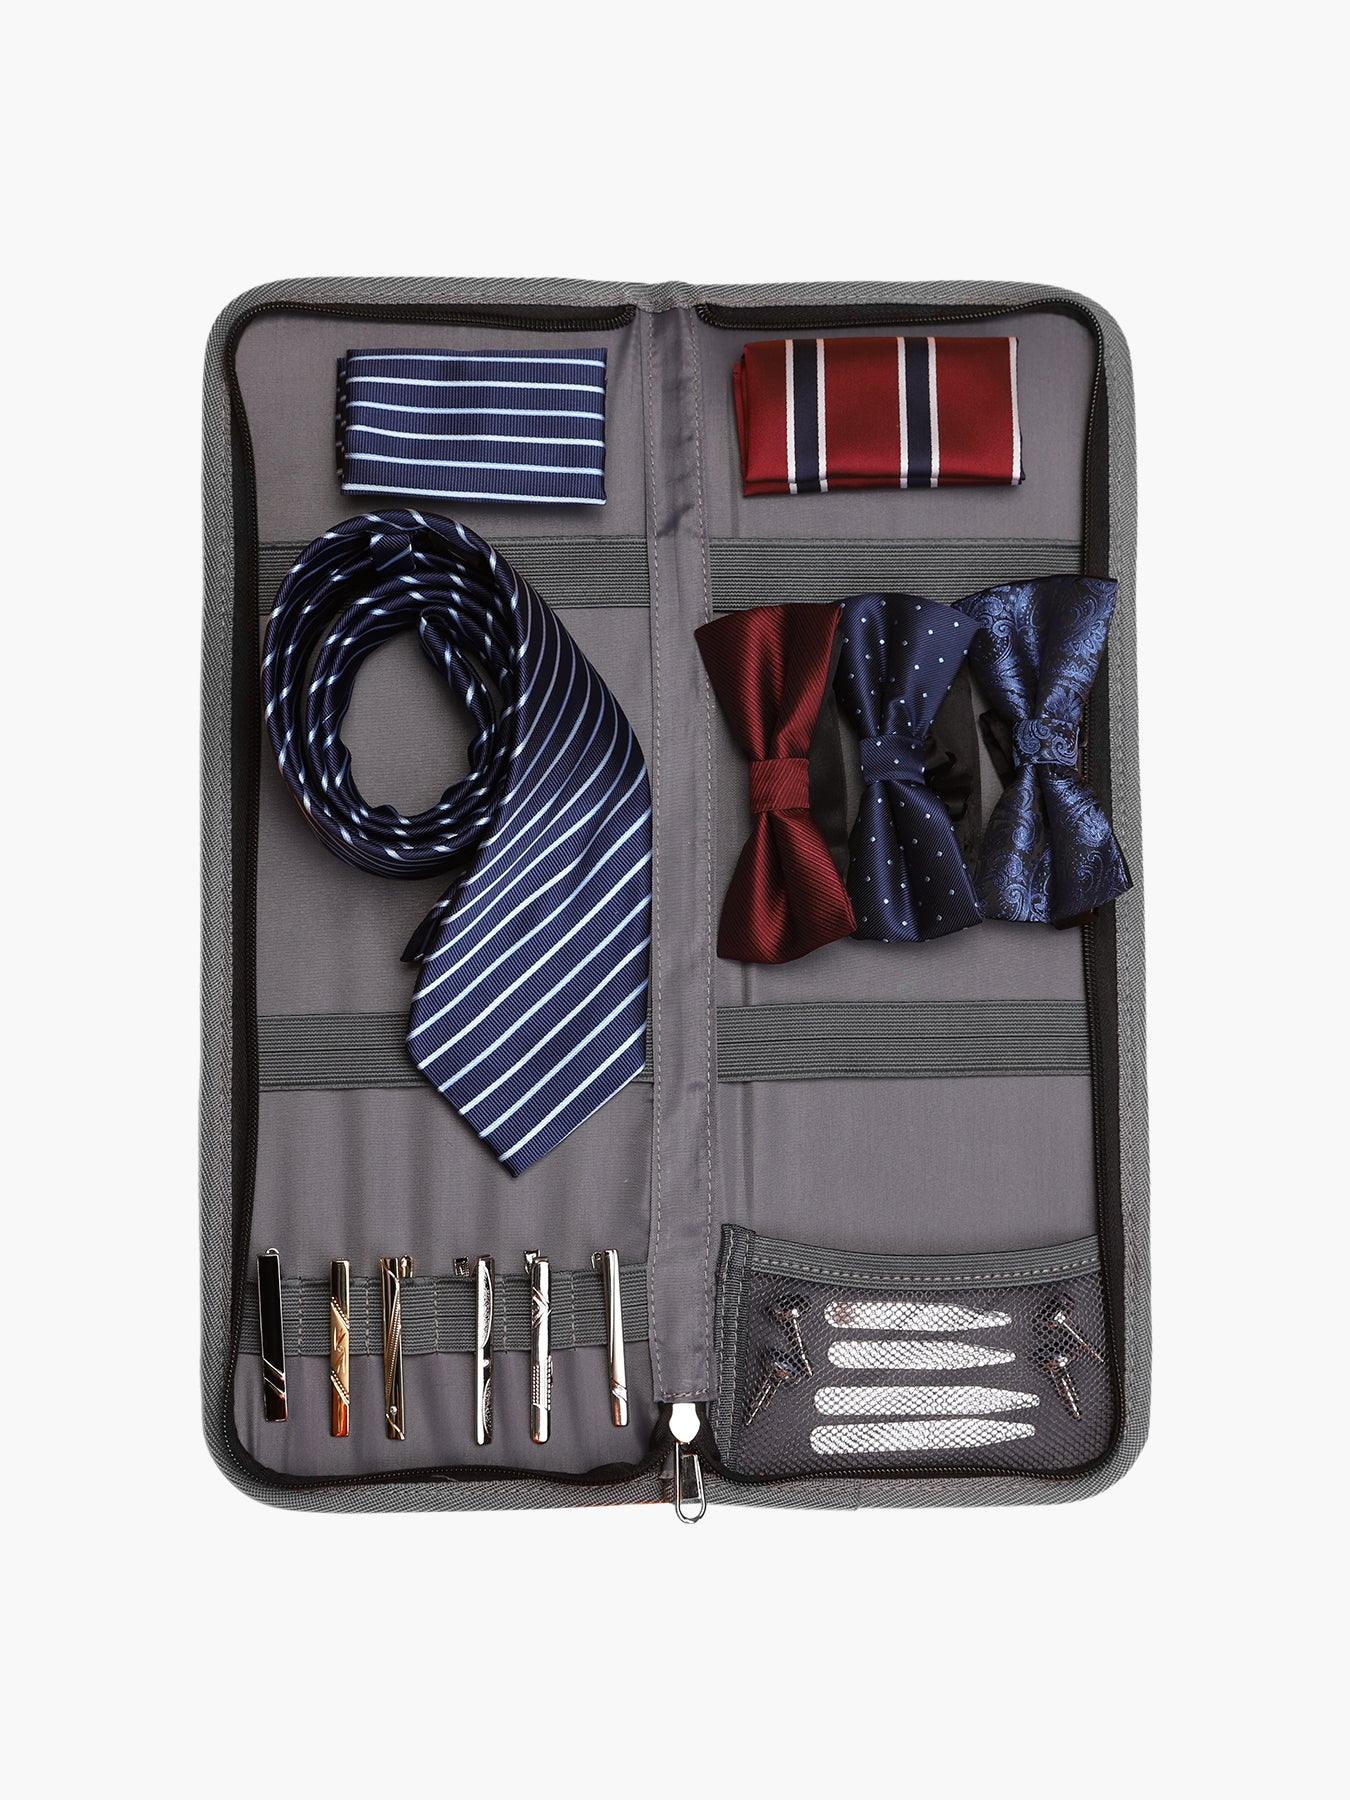 Modoker Tie Case for Travel Organizer Bag Suit Accessories